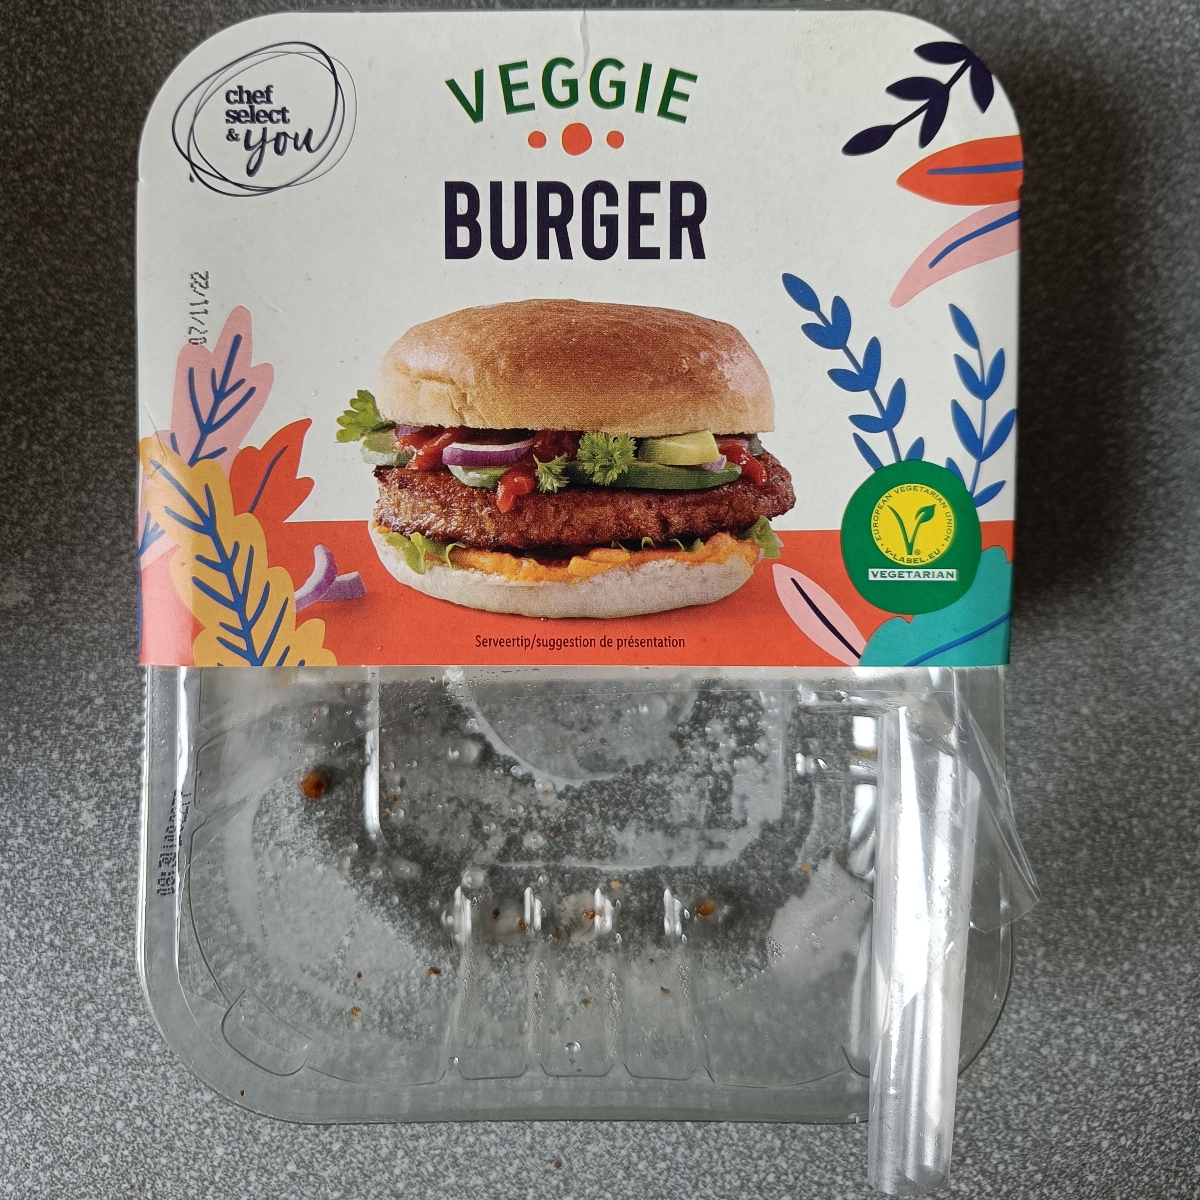 burger | abillion you veggie select chef & Reviews veggie